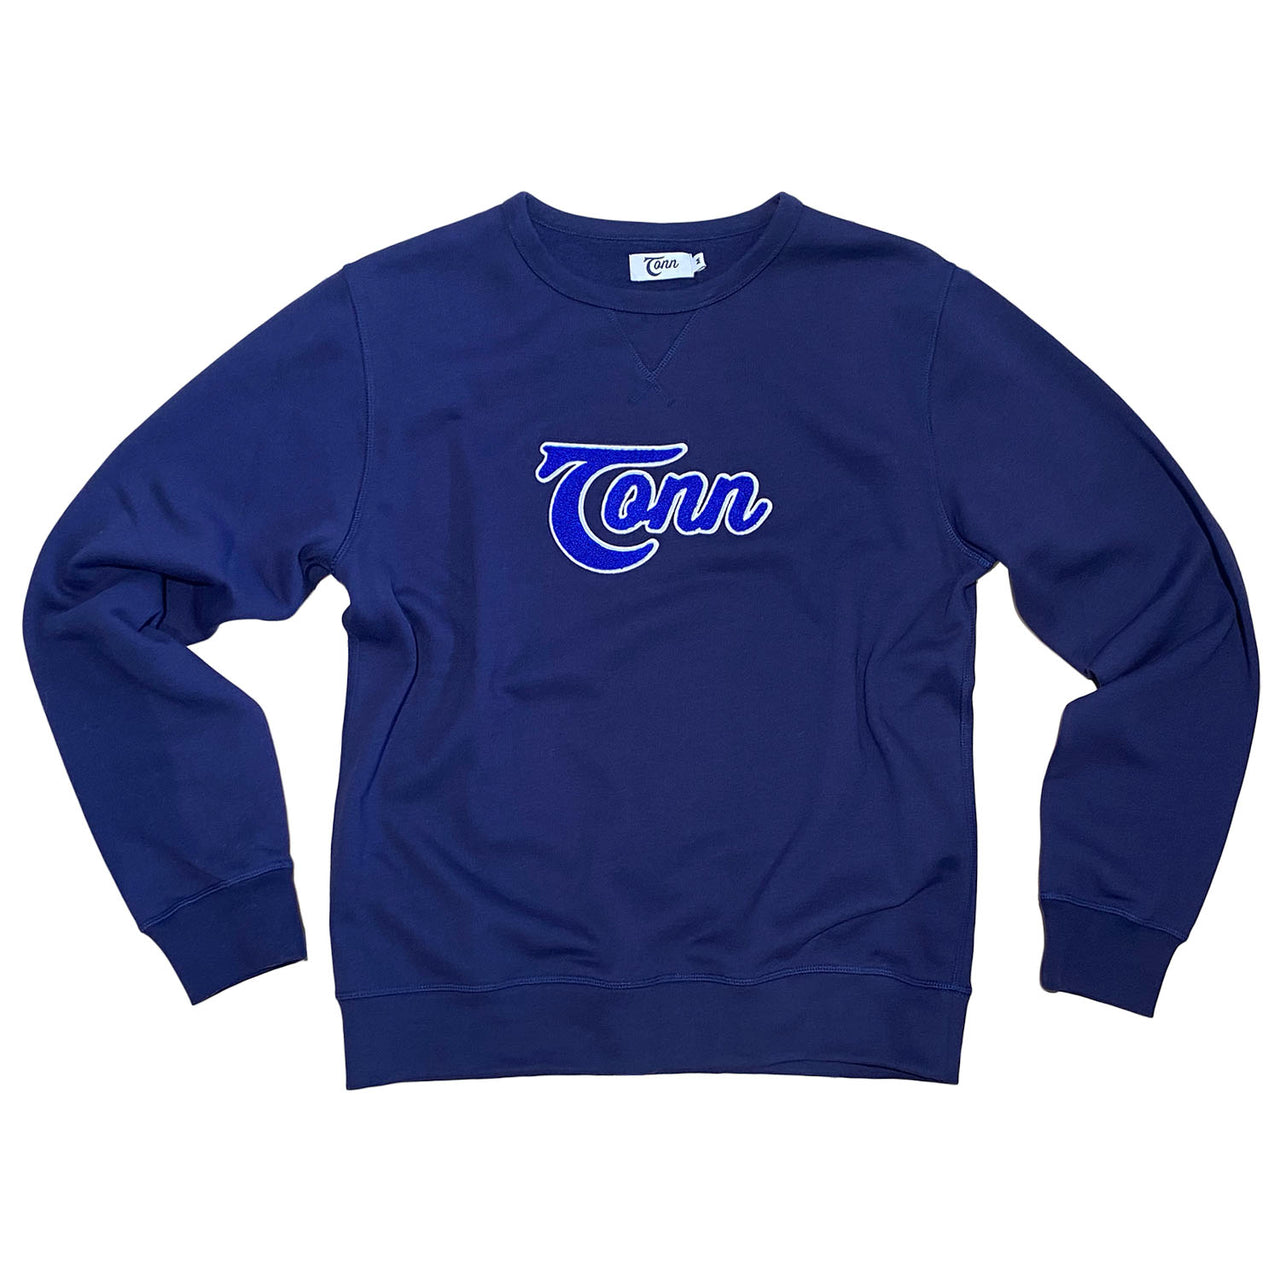 Chenille Appliqué Organic Cotton Sweatshirt Navy